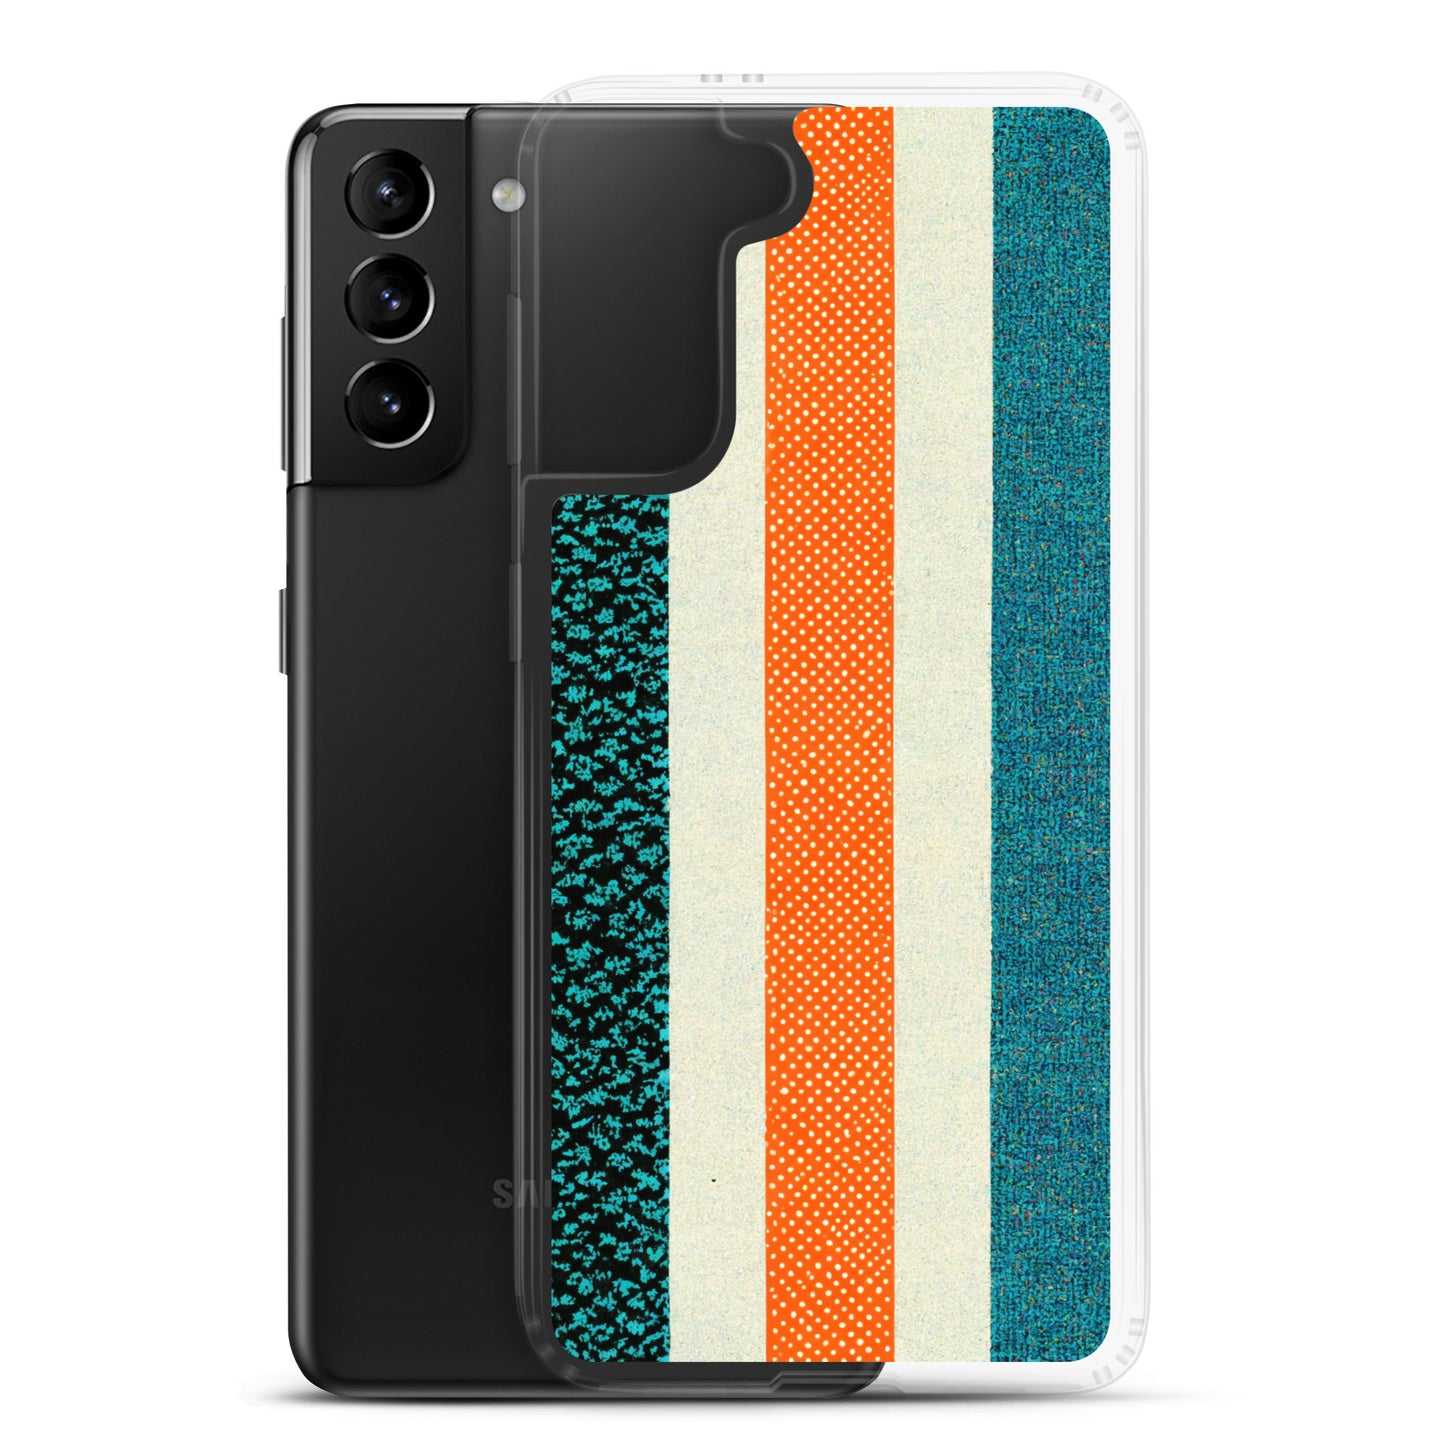 Samsung Case - Bold Patterns #3